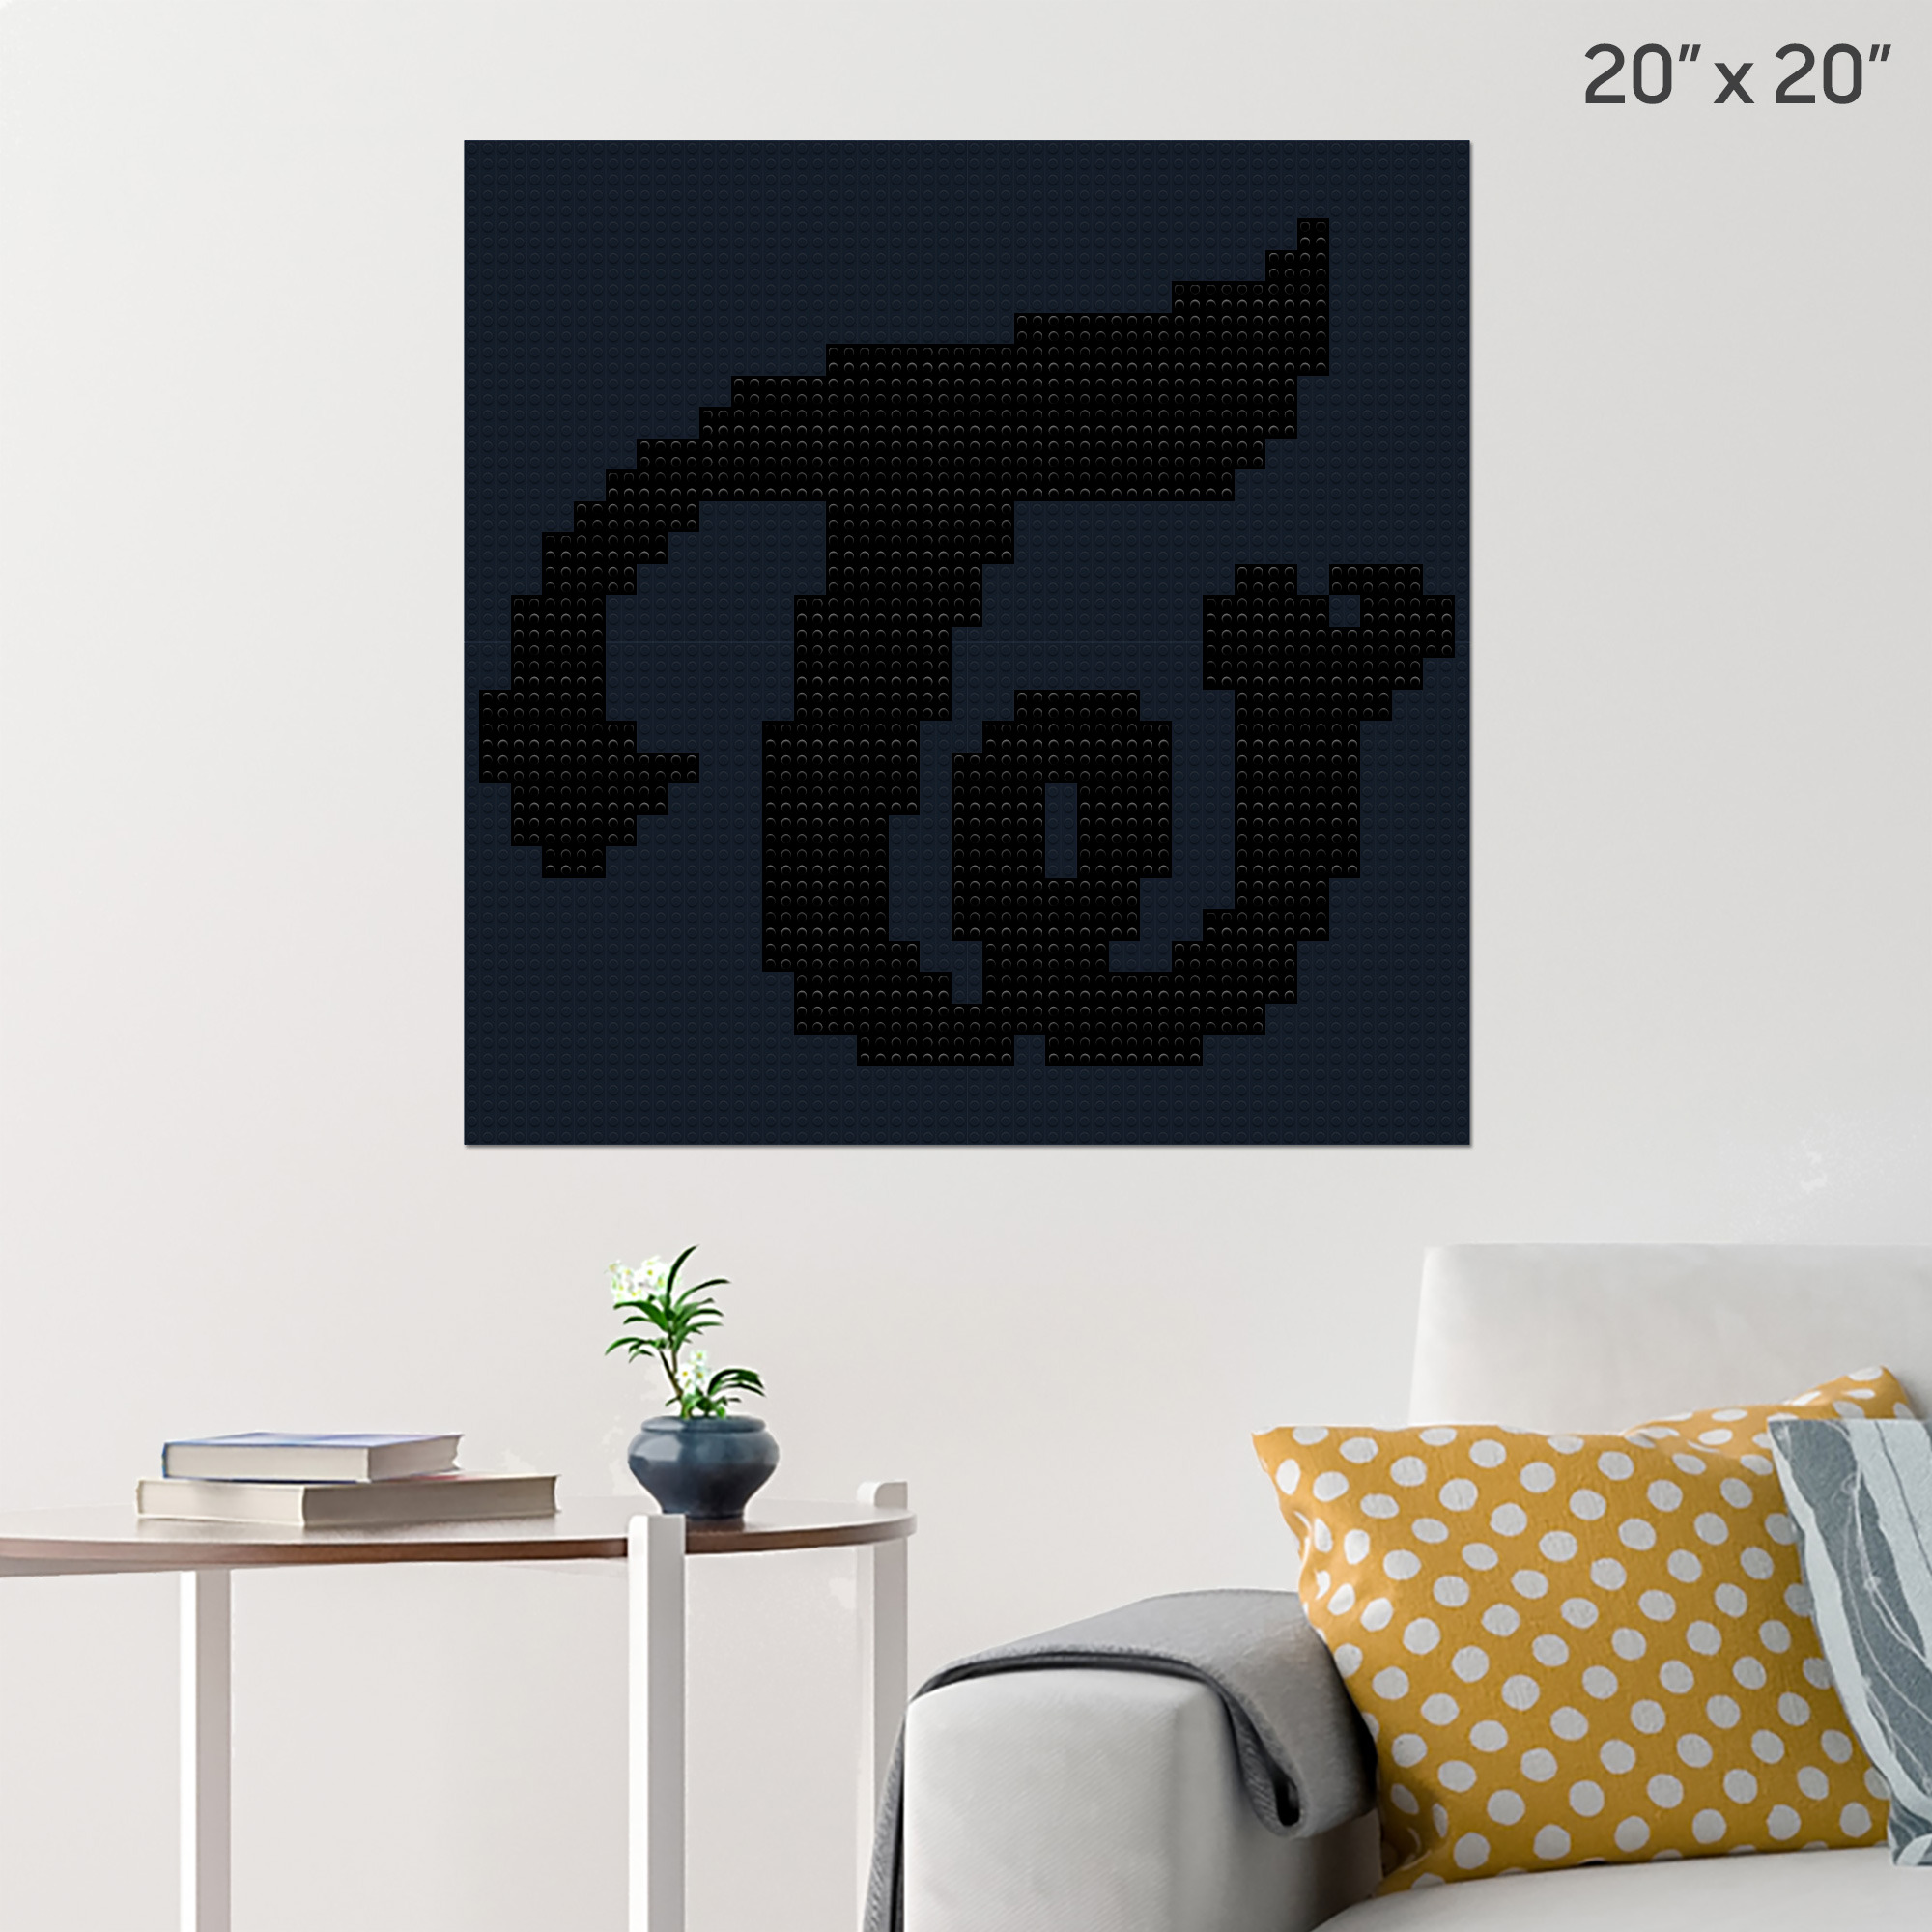 Pixilart - Twice logo by Pixels-4-U